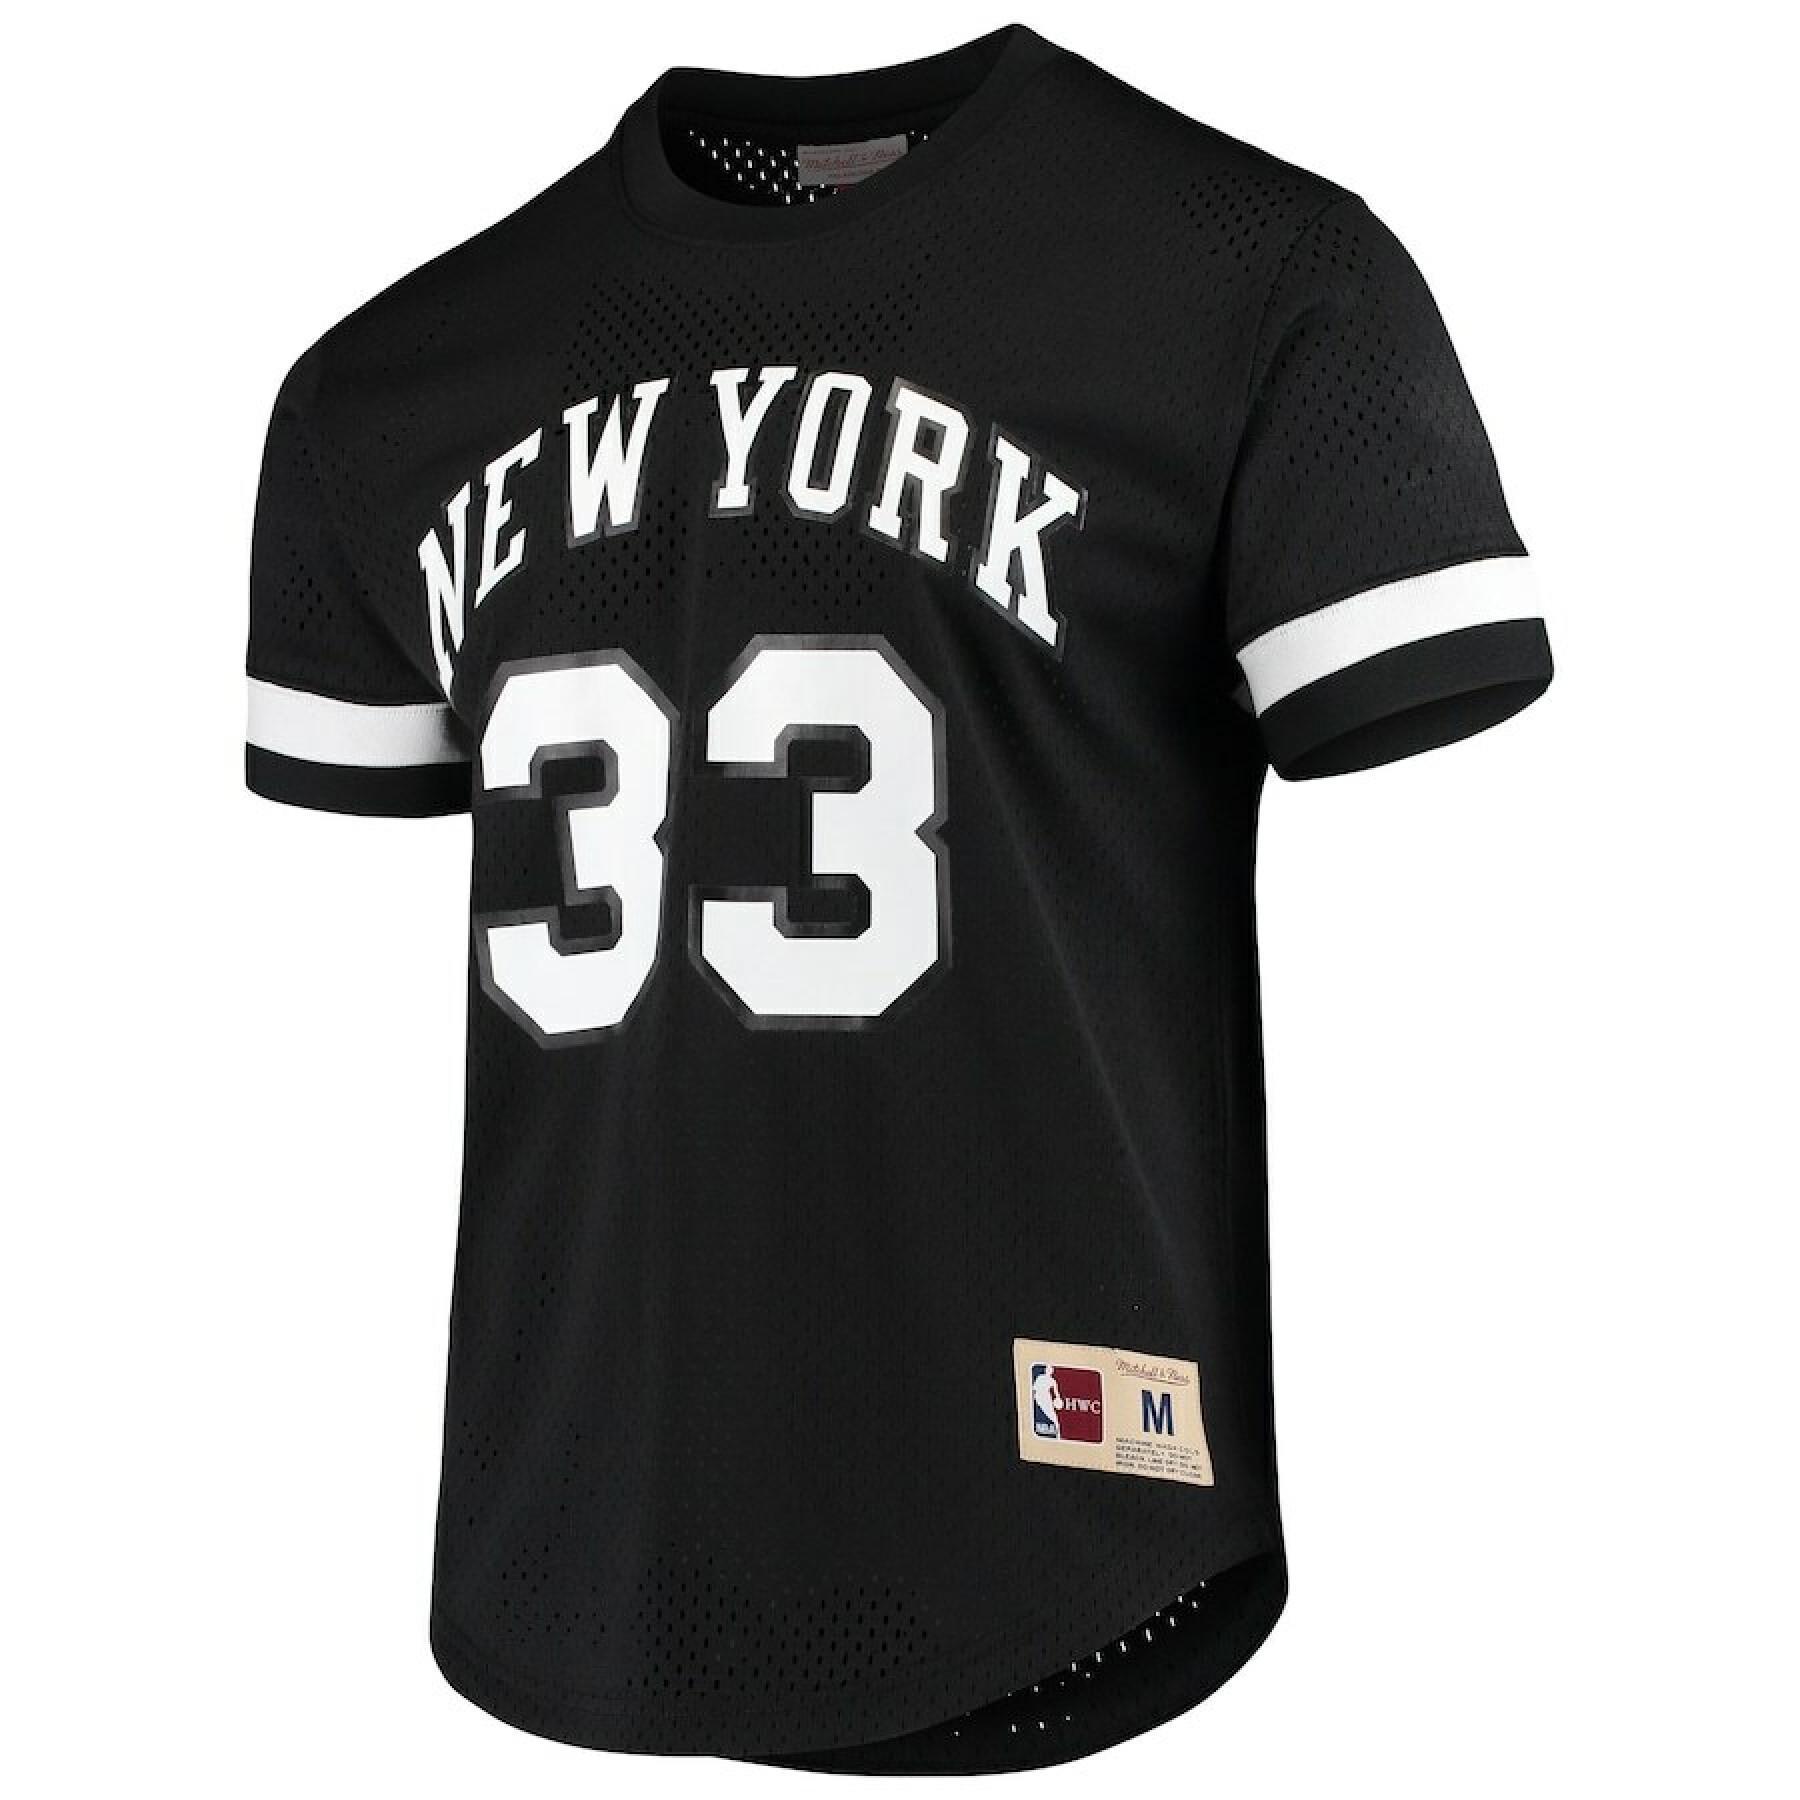 T-shirt New York Knicks black & white Patrick Ewing